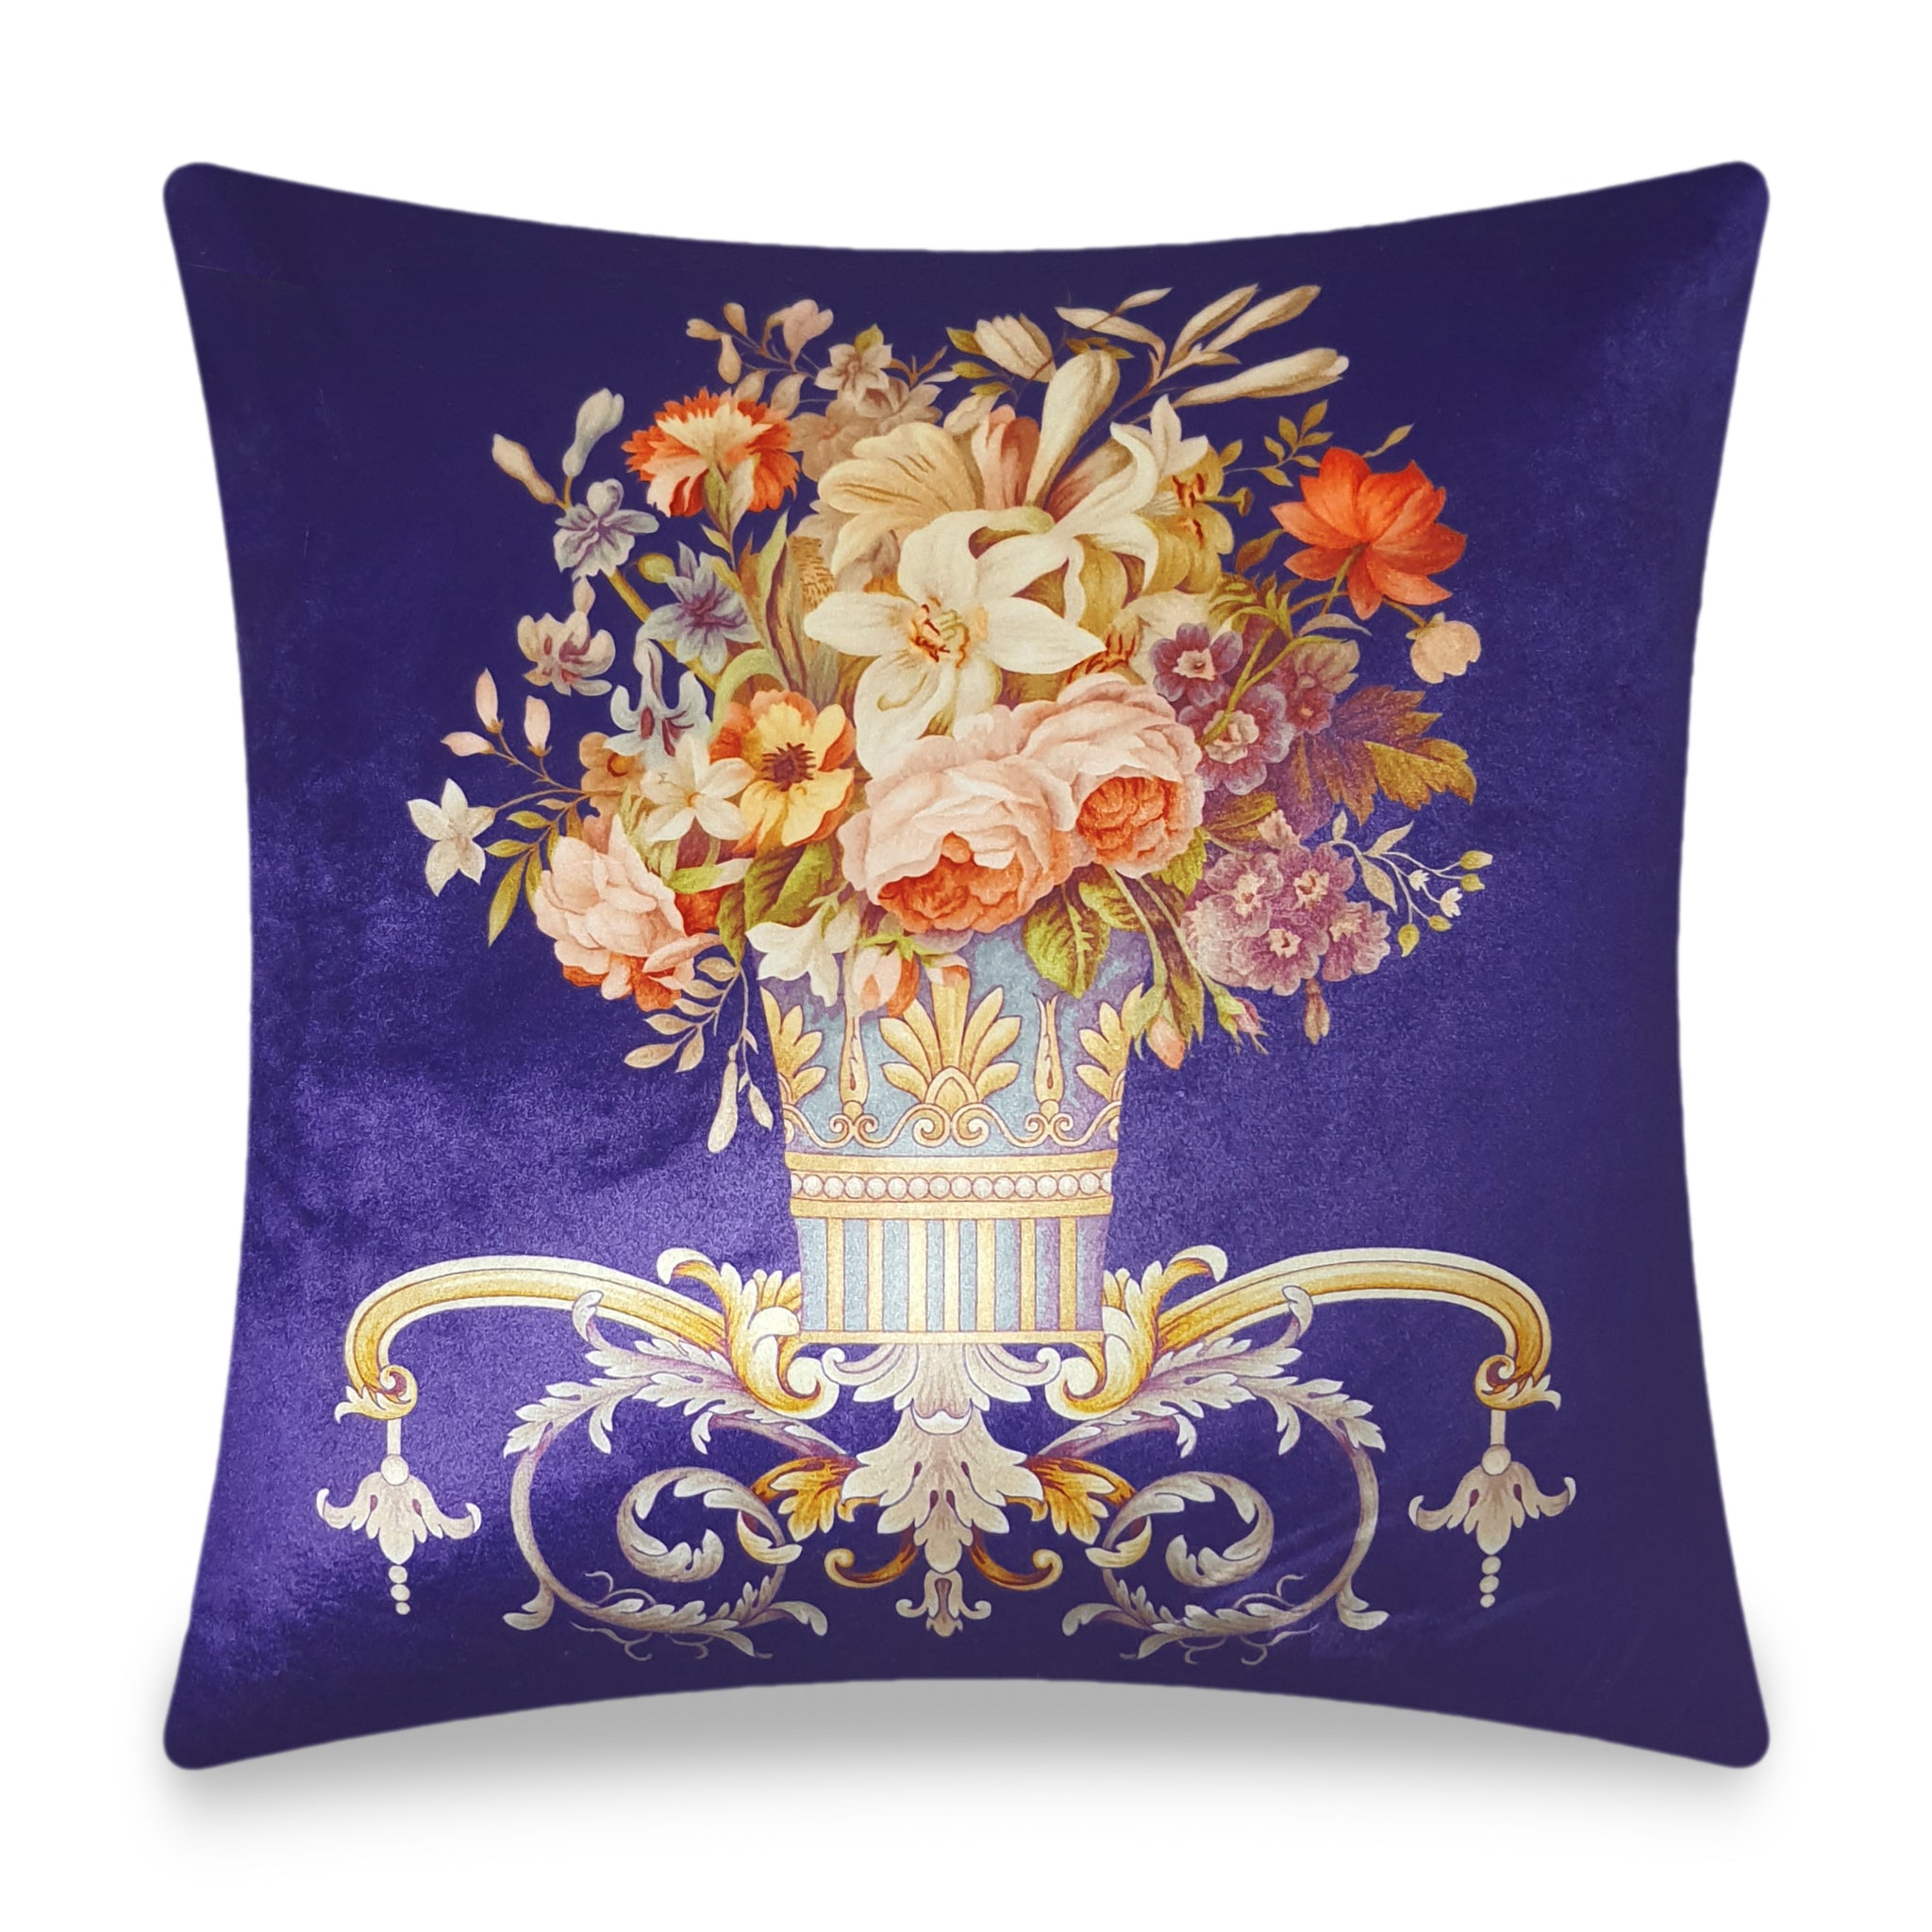  Velvet Cushion Cover Floral and Antique Decorative Pillowcase Classic Home Decor Throw Pillow for Sofa Chair 45x45 cm 